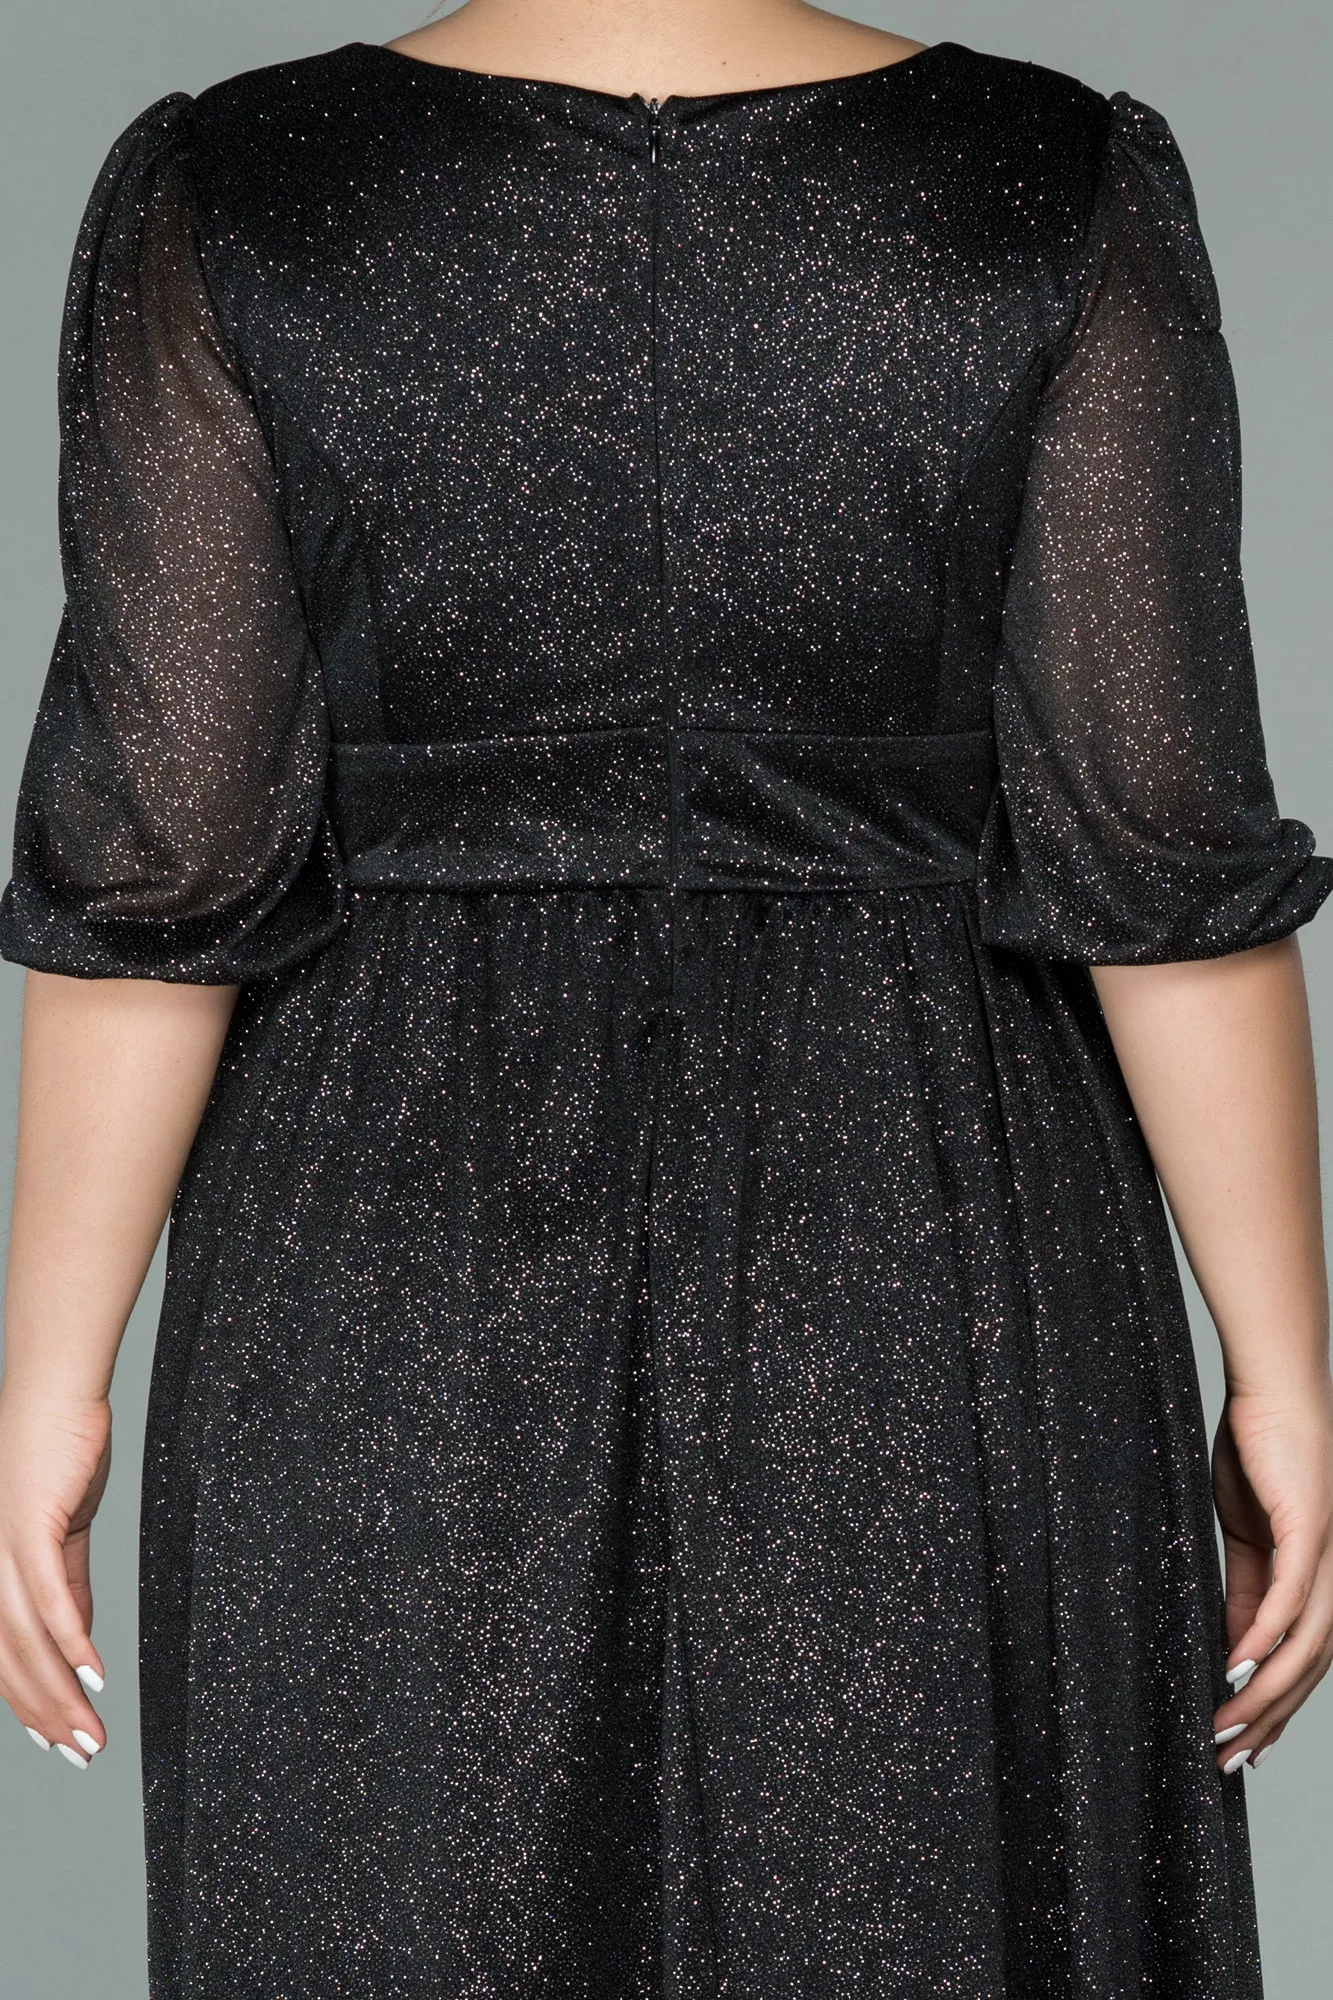 Black-Silver-Short Plus Size Evening Dress ABK1098